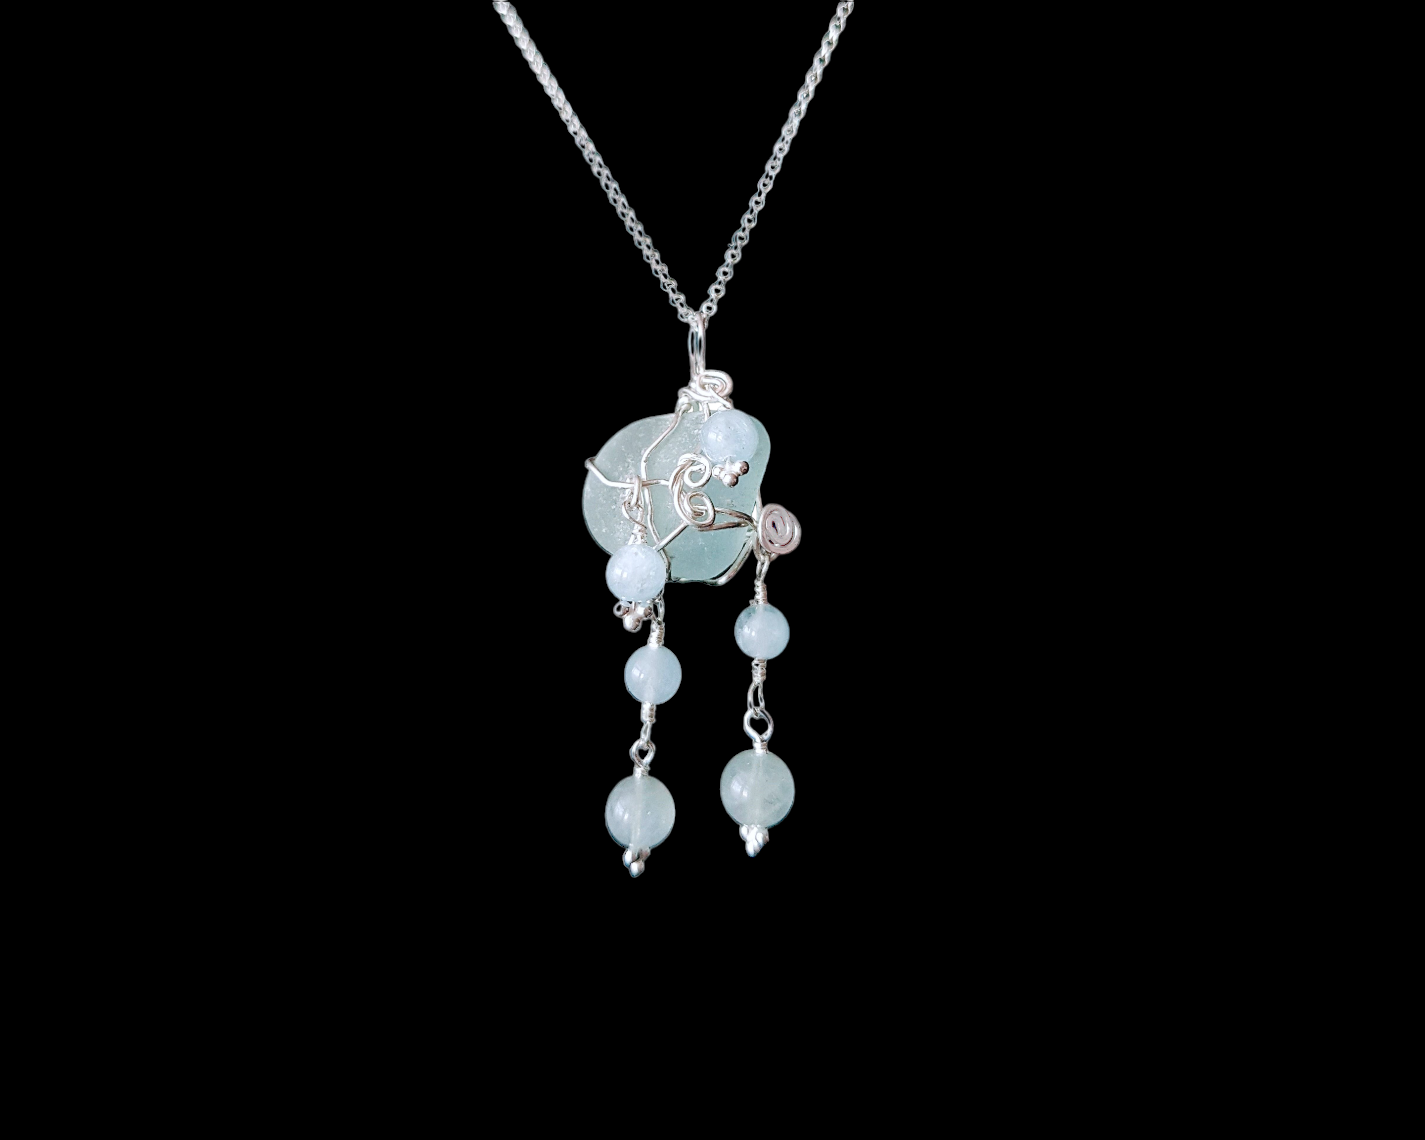 Aquamarine Sea Glass/Beach Glass Water Pendant. Wire wrapped aqua blue beach glass pendant with genuine Aquamarine dangles. Pendant on a fine diamond cut rolo chain.  